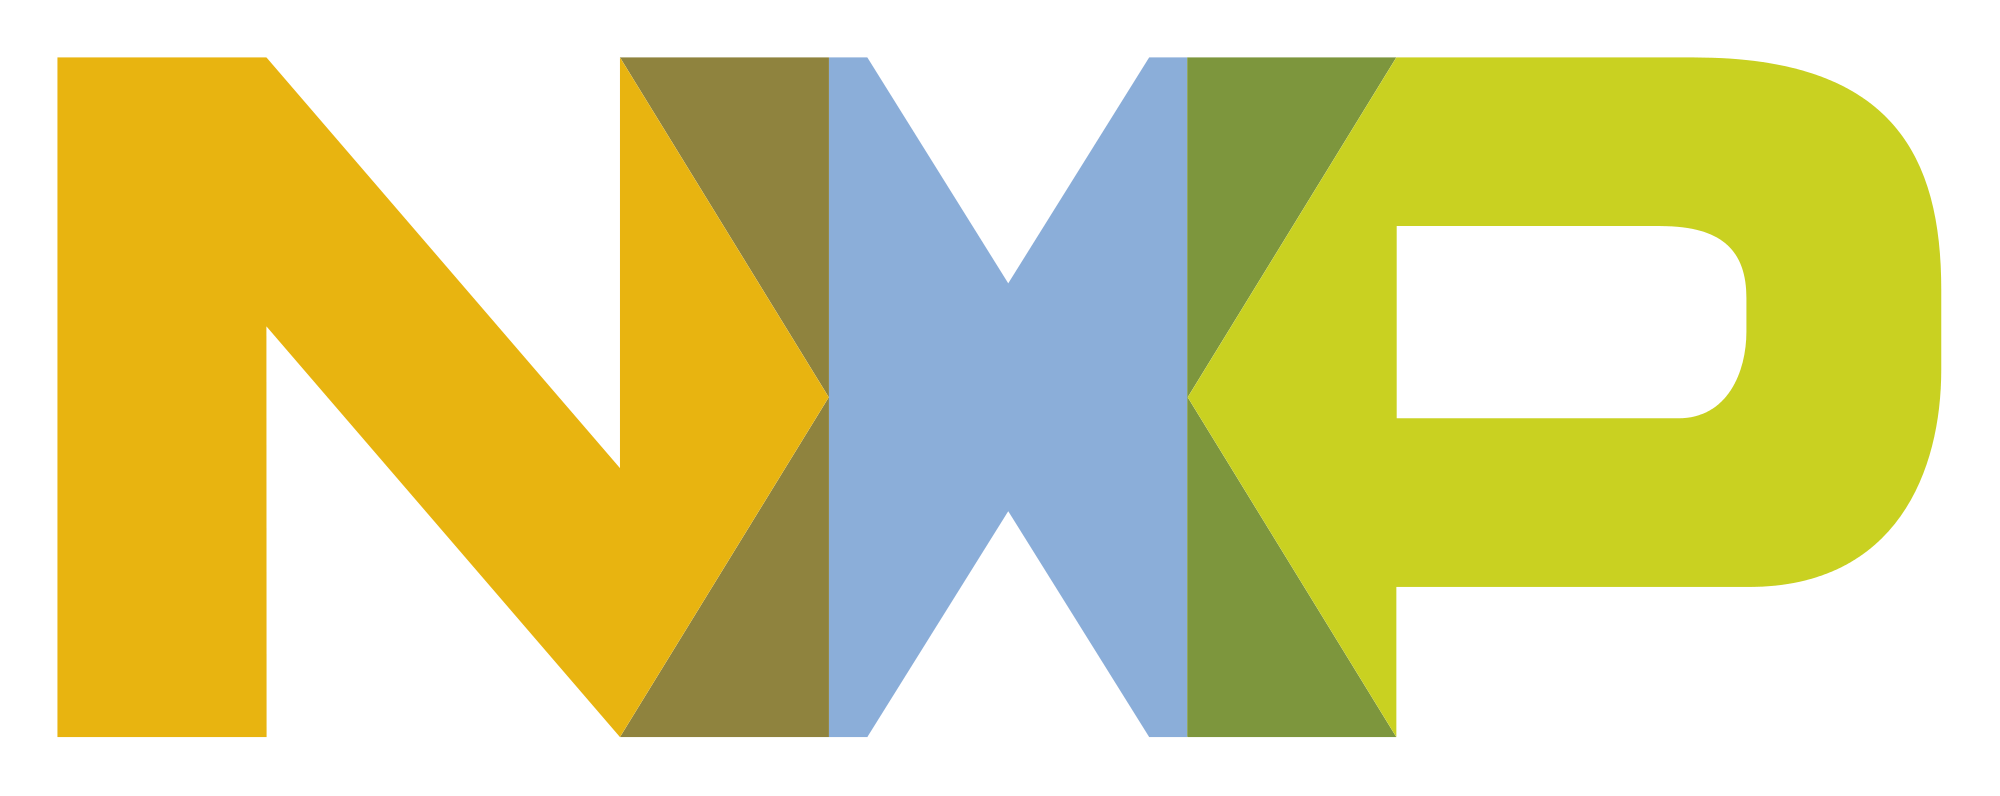 NXP Logo - NXP Logo.svg